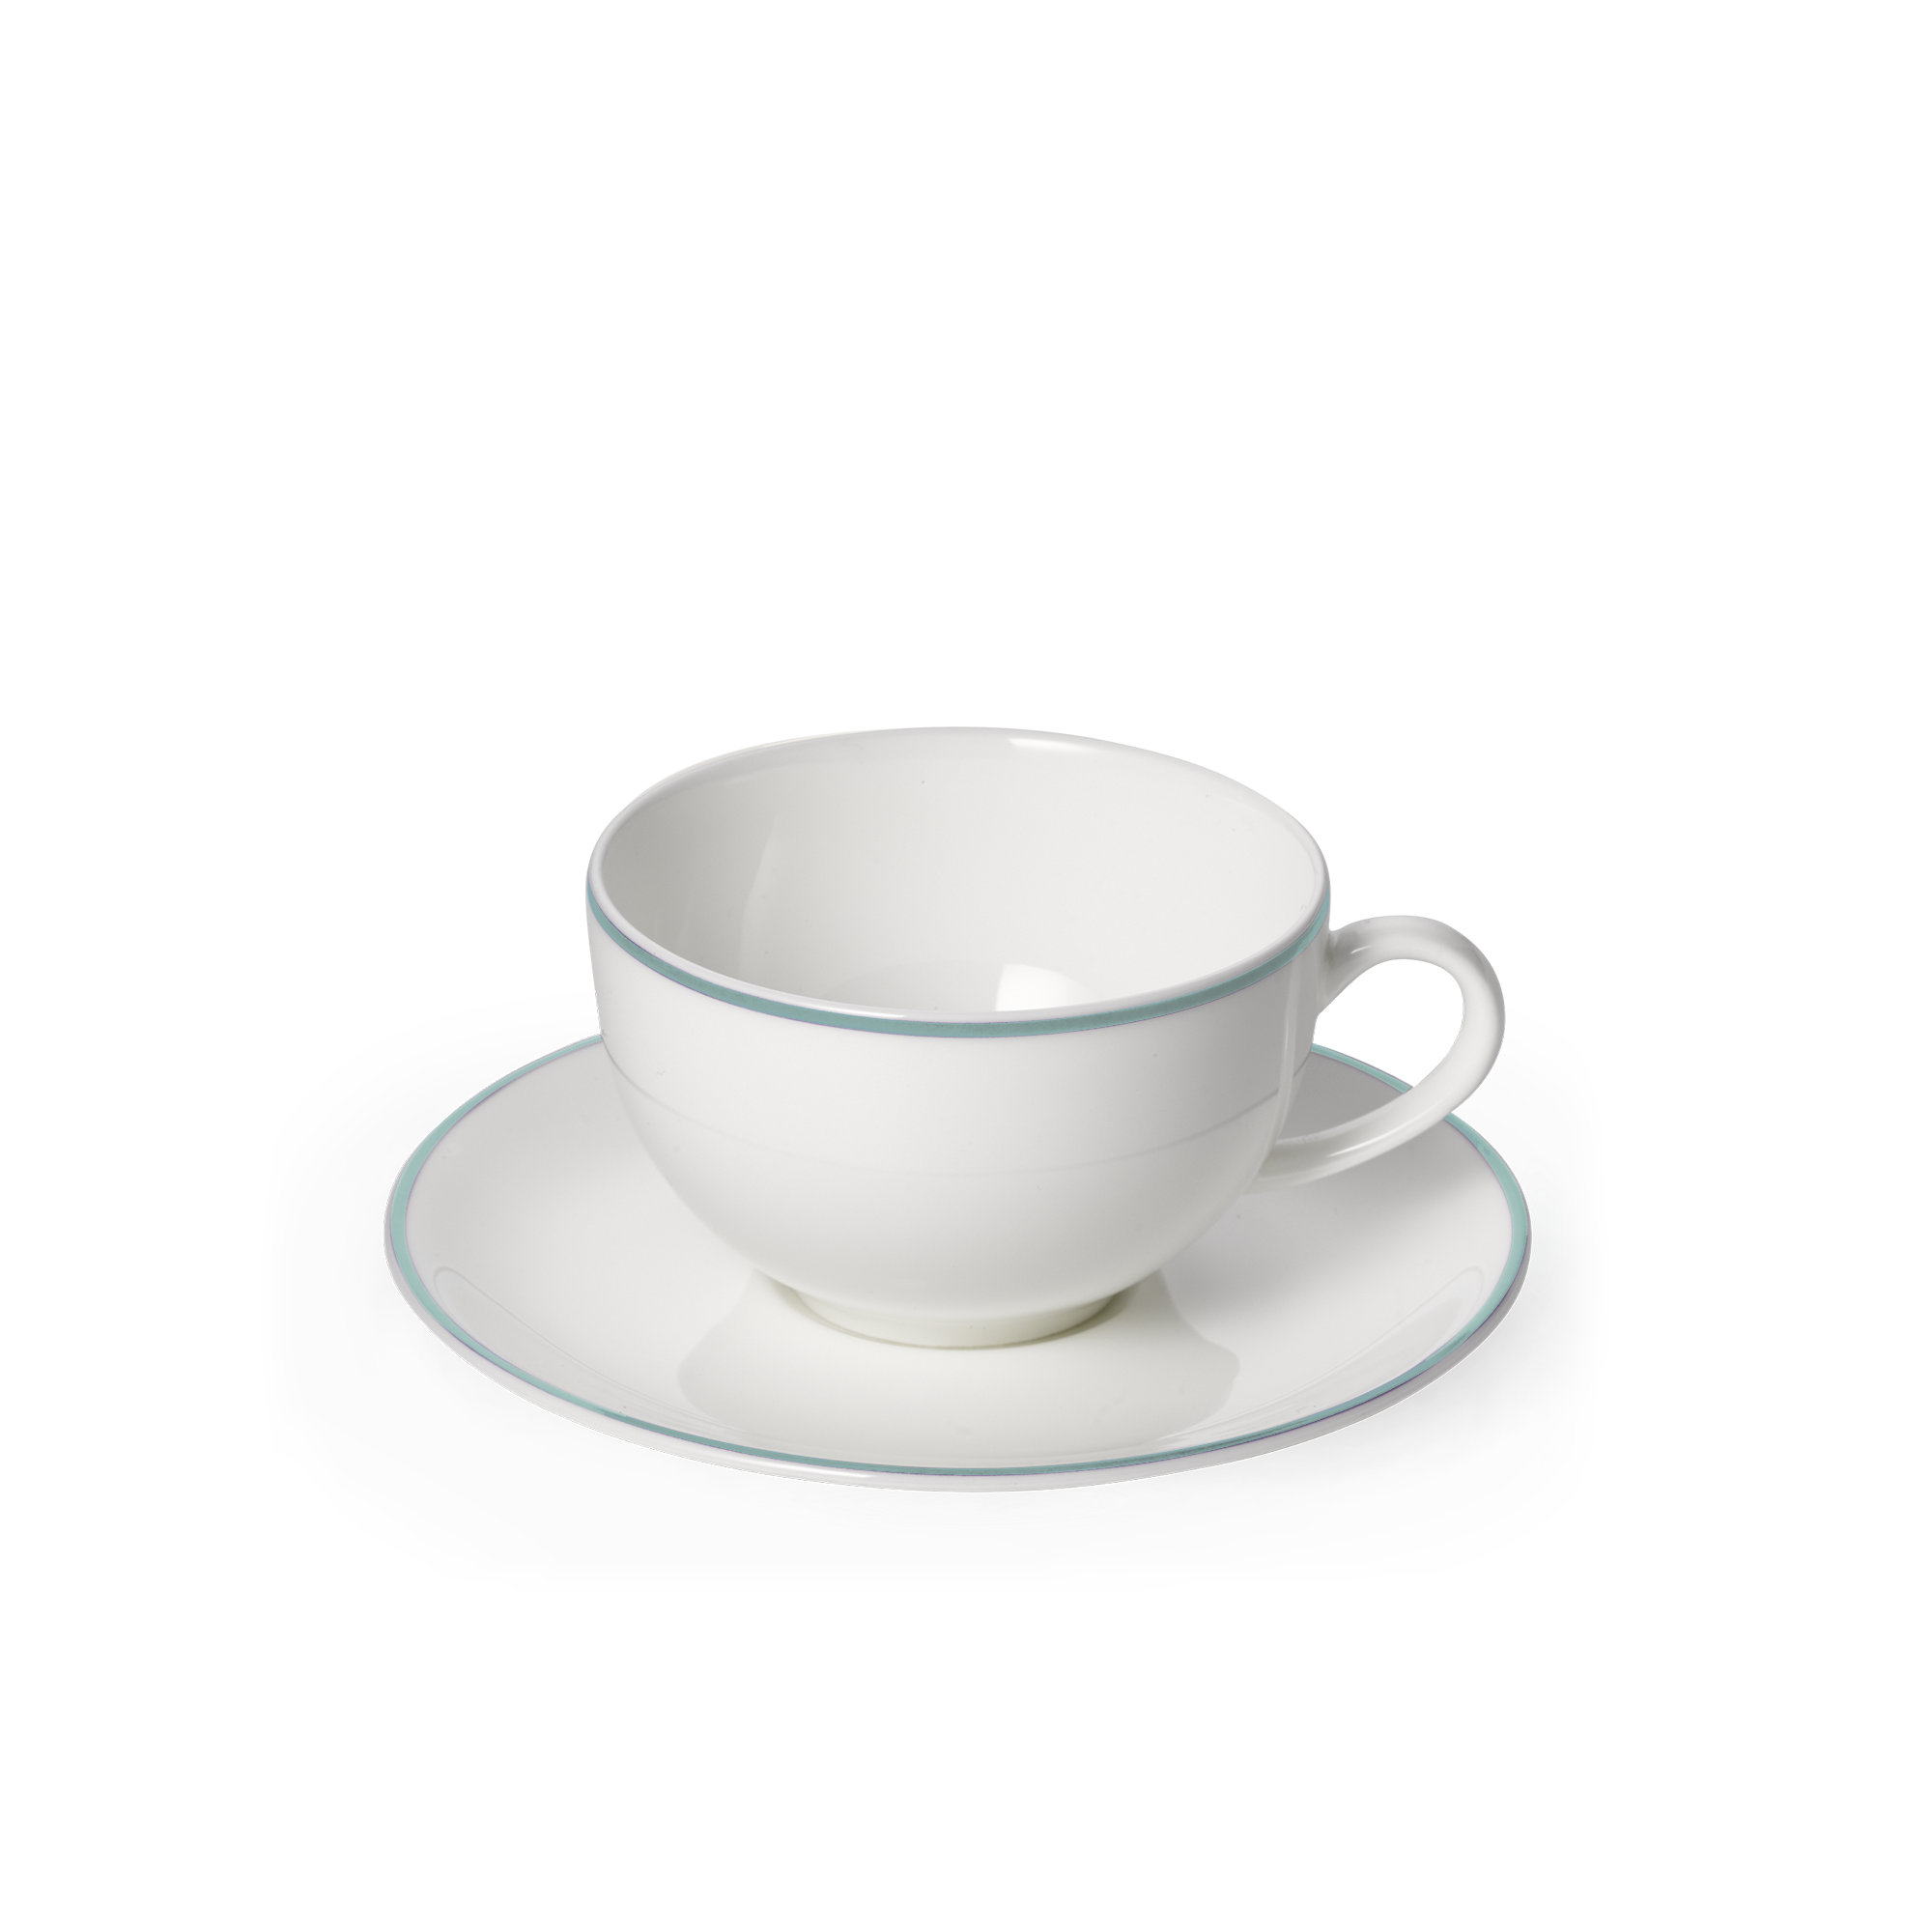 Simplicity Mint coffee mug